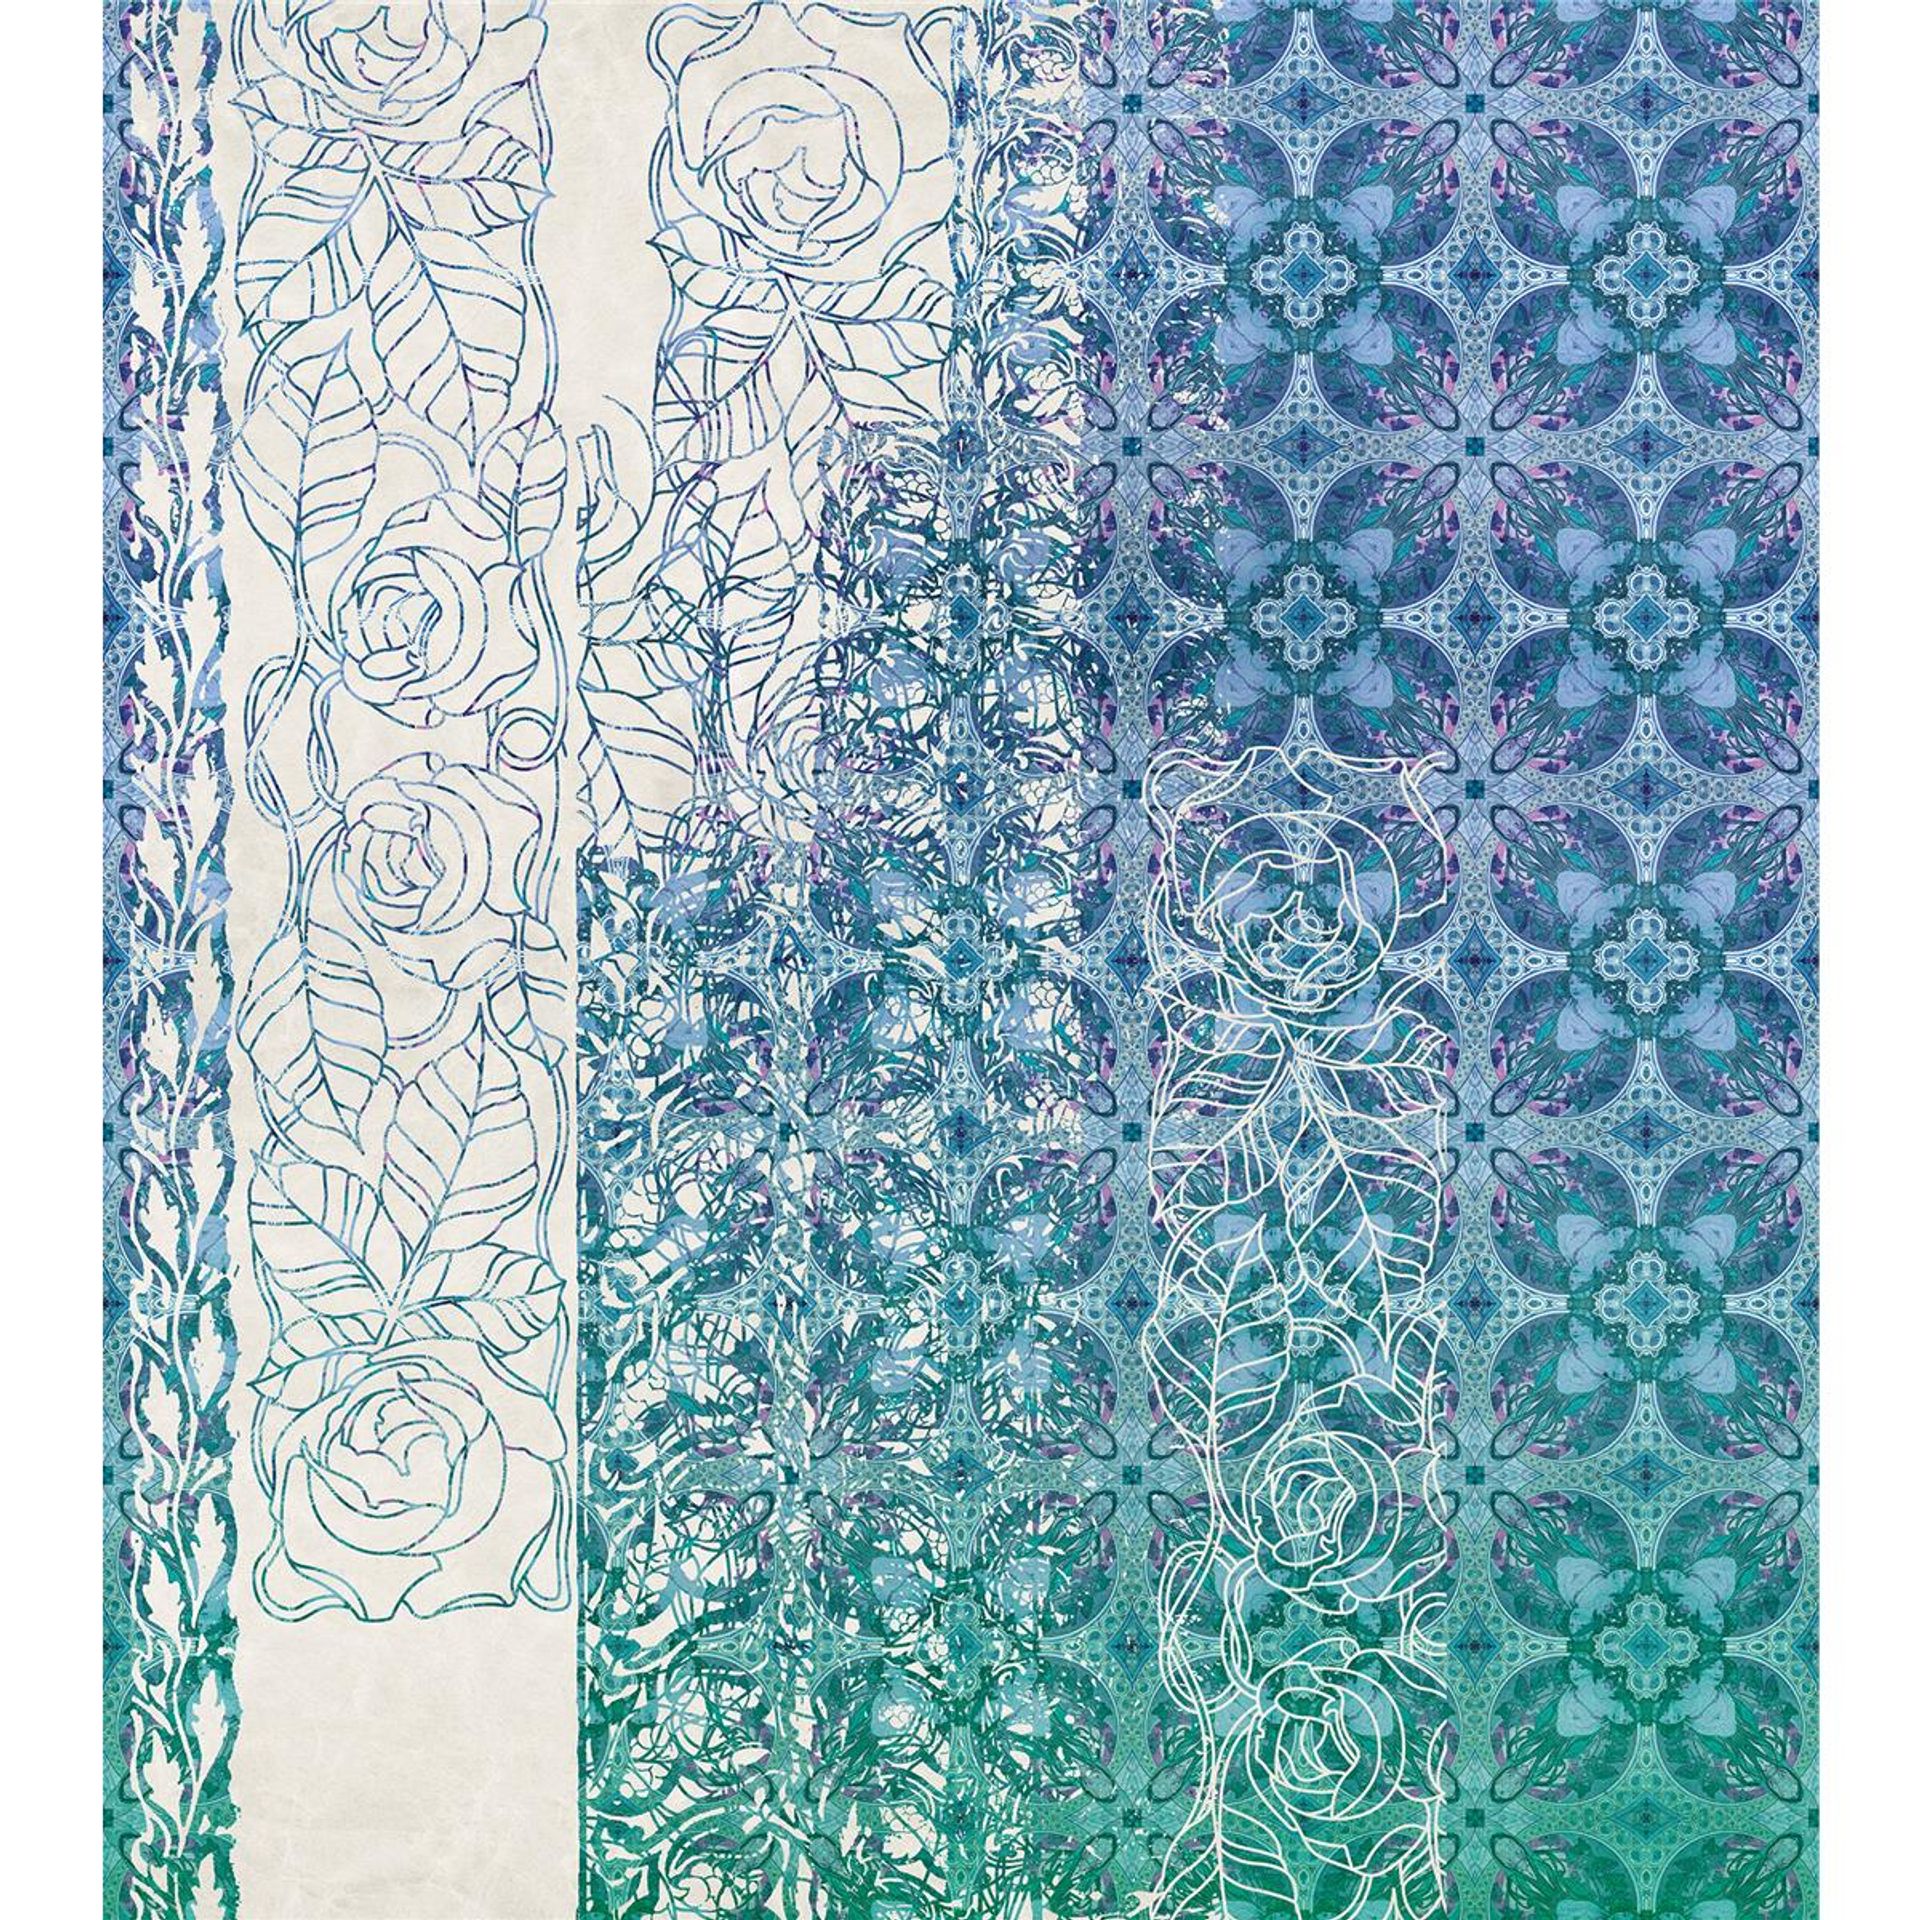 Vlies Fototapete - Art Nouveau Bleu - Größe 250 x 280 cm